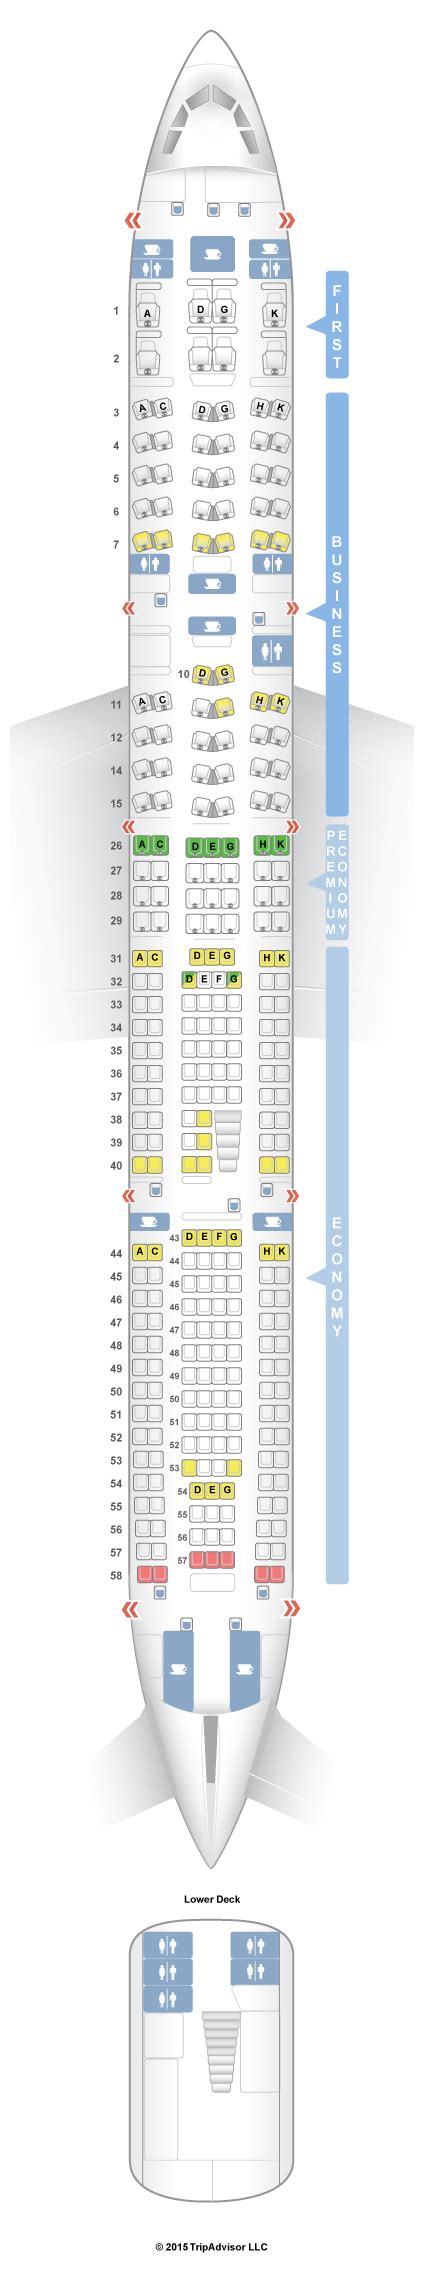 Seatguru Seat Map Lufthansa Airbus A340 600 346 V4 Seatguru Airbus